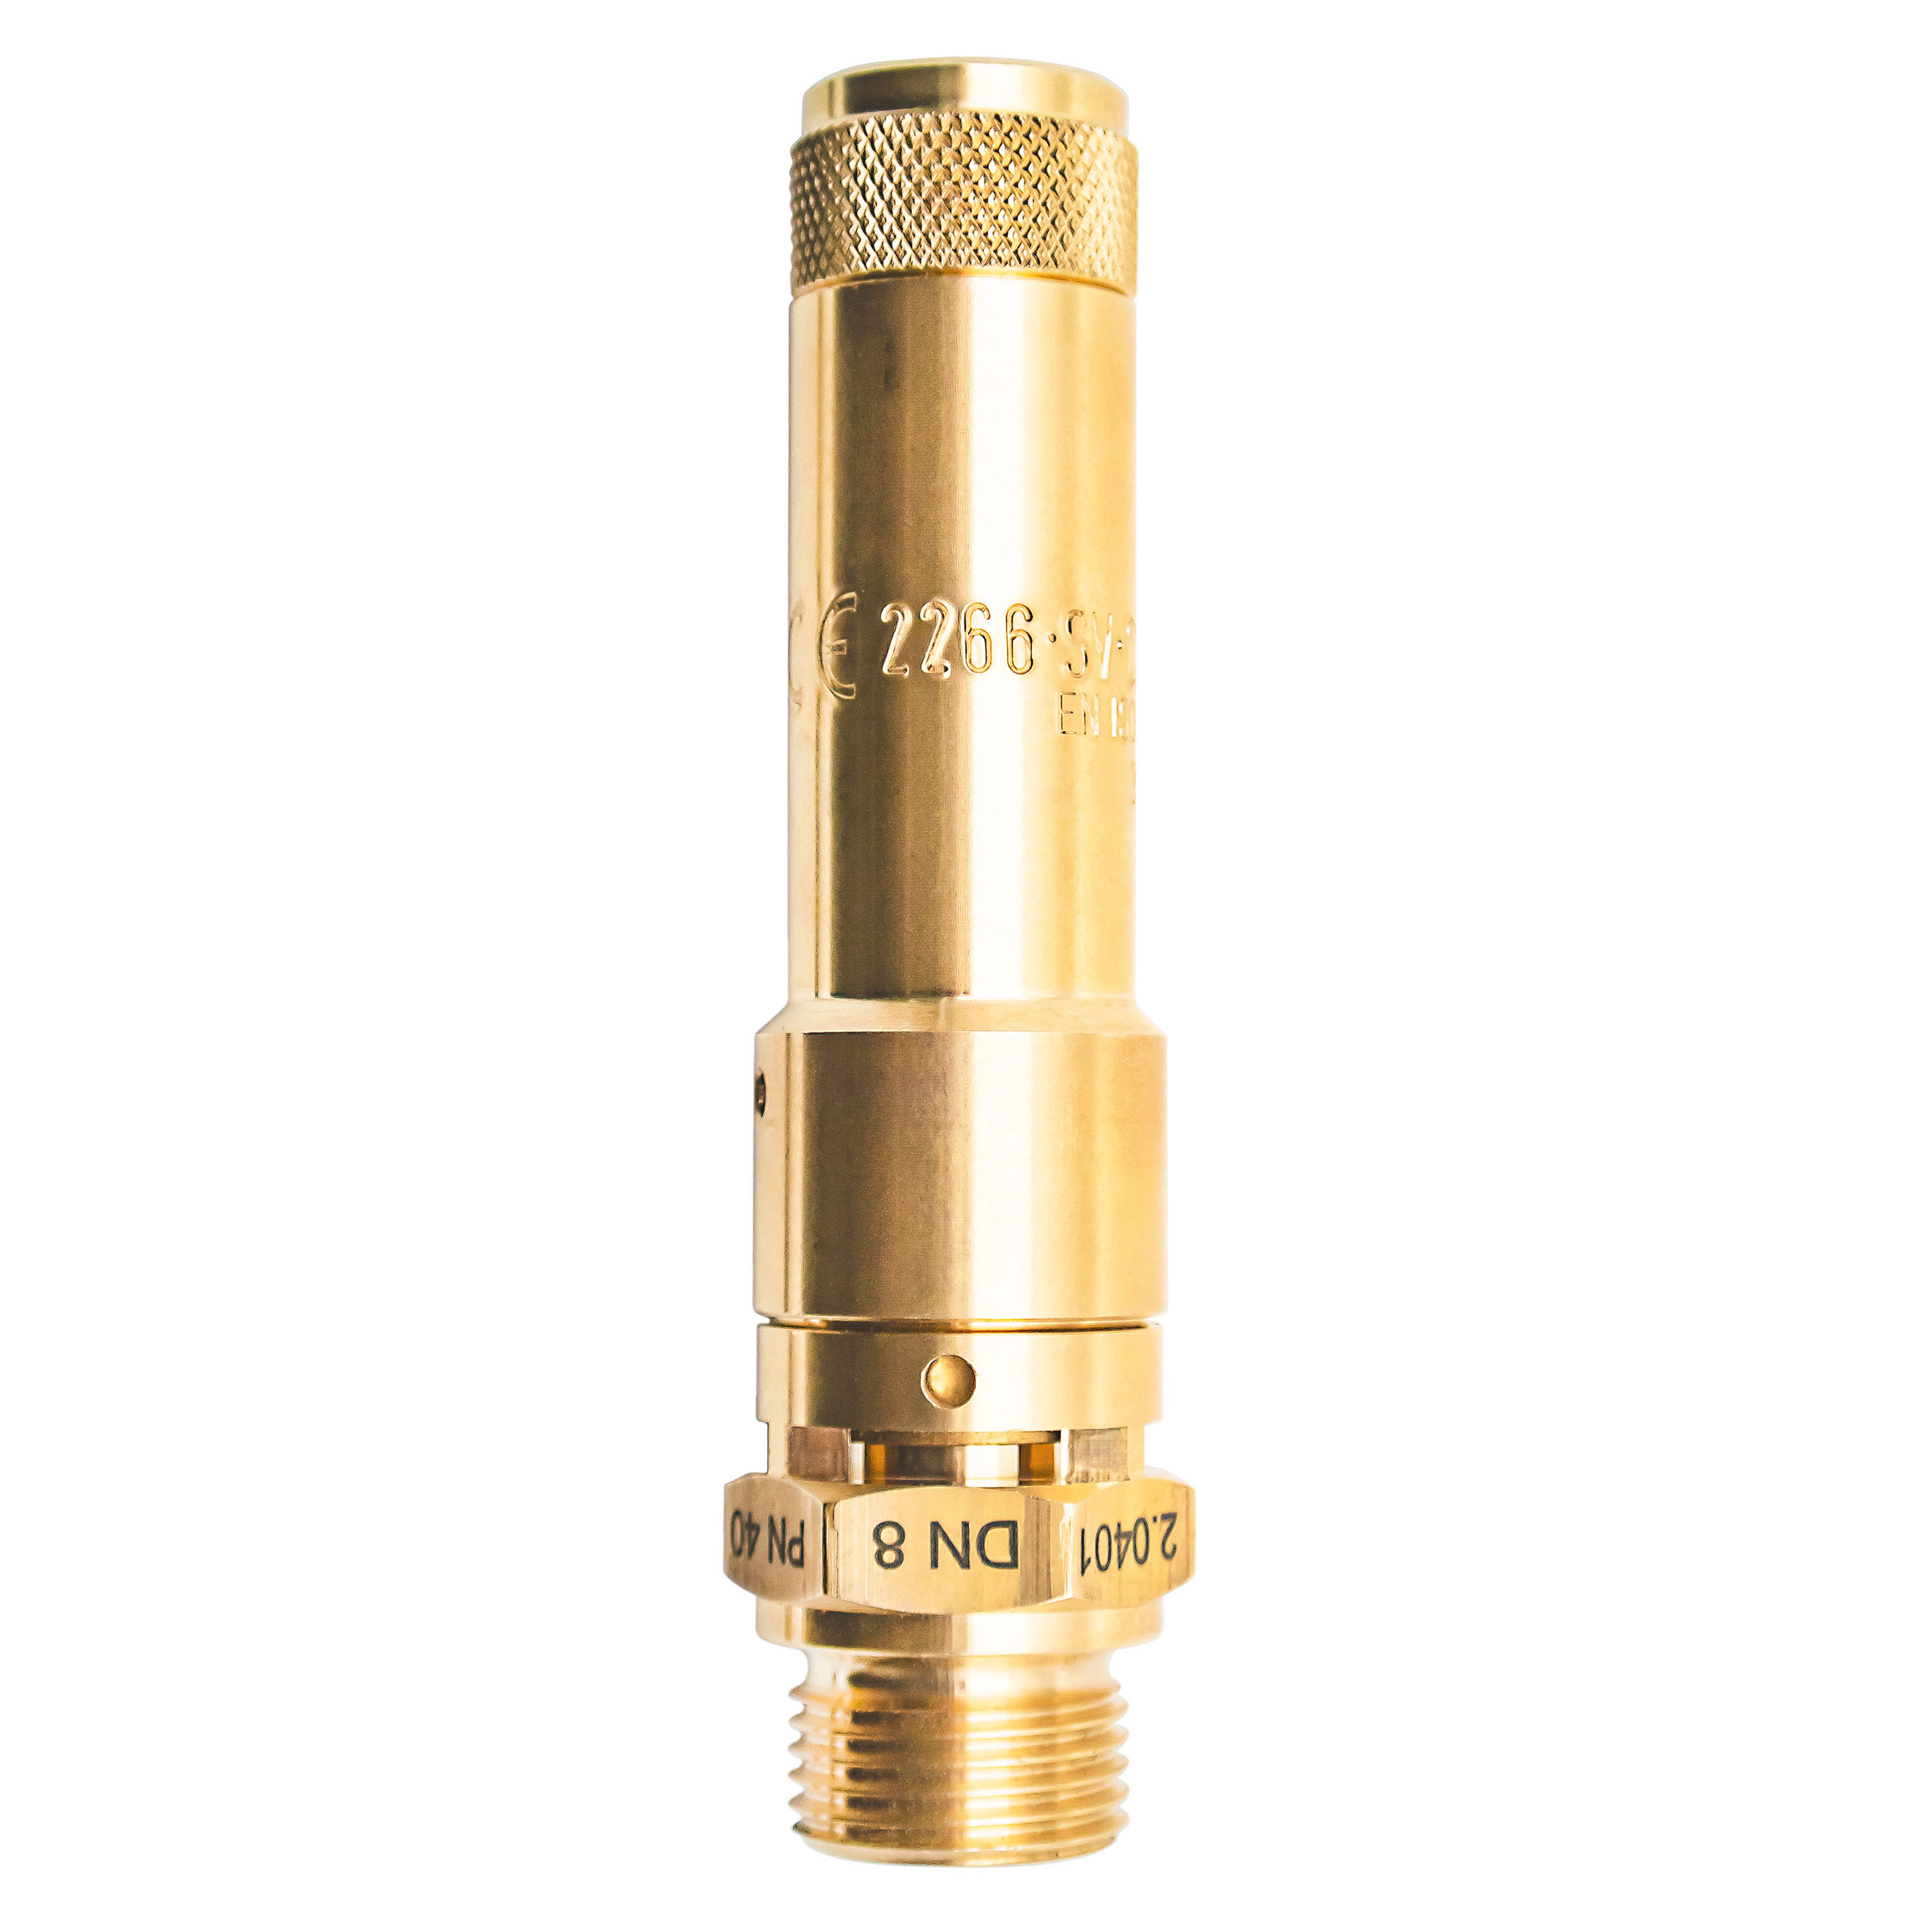 Savety valve component tested DN 8, G½, set pressure: 5.1 bar (73,95 psi)